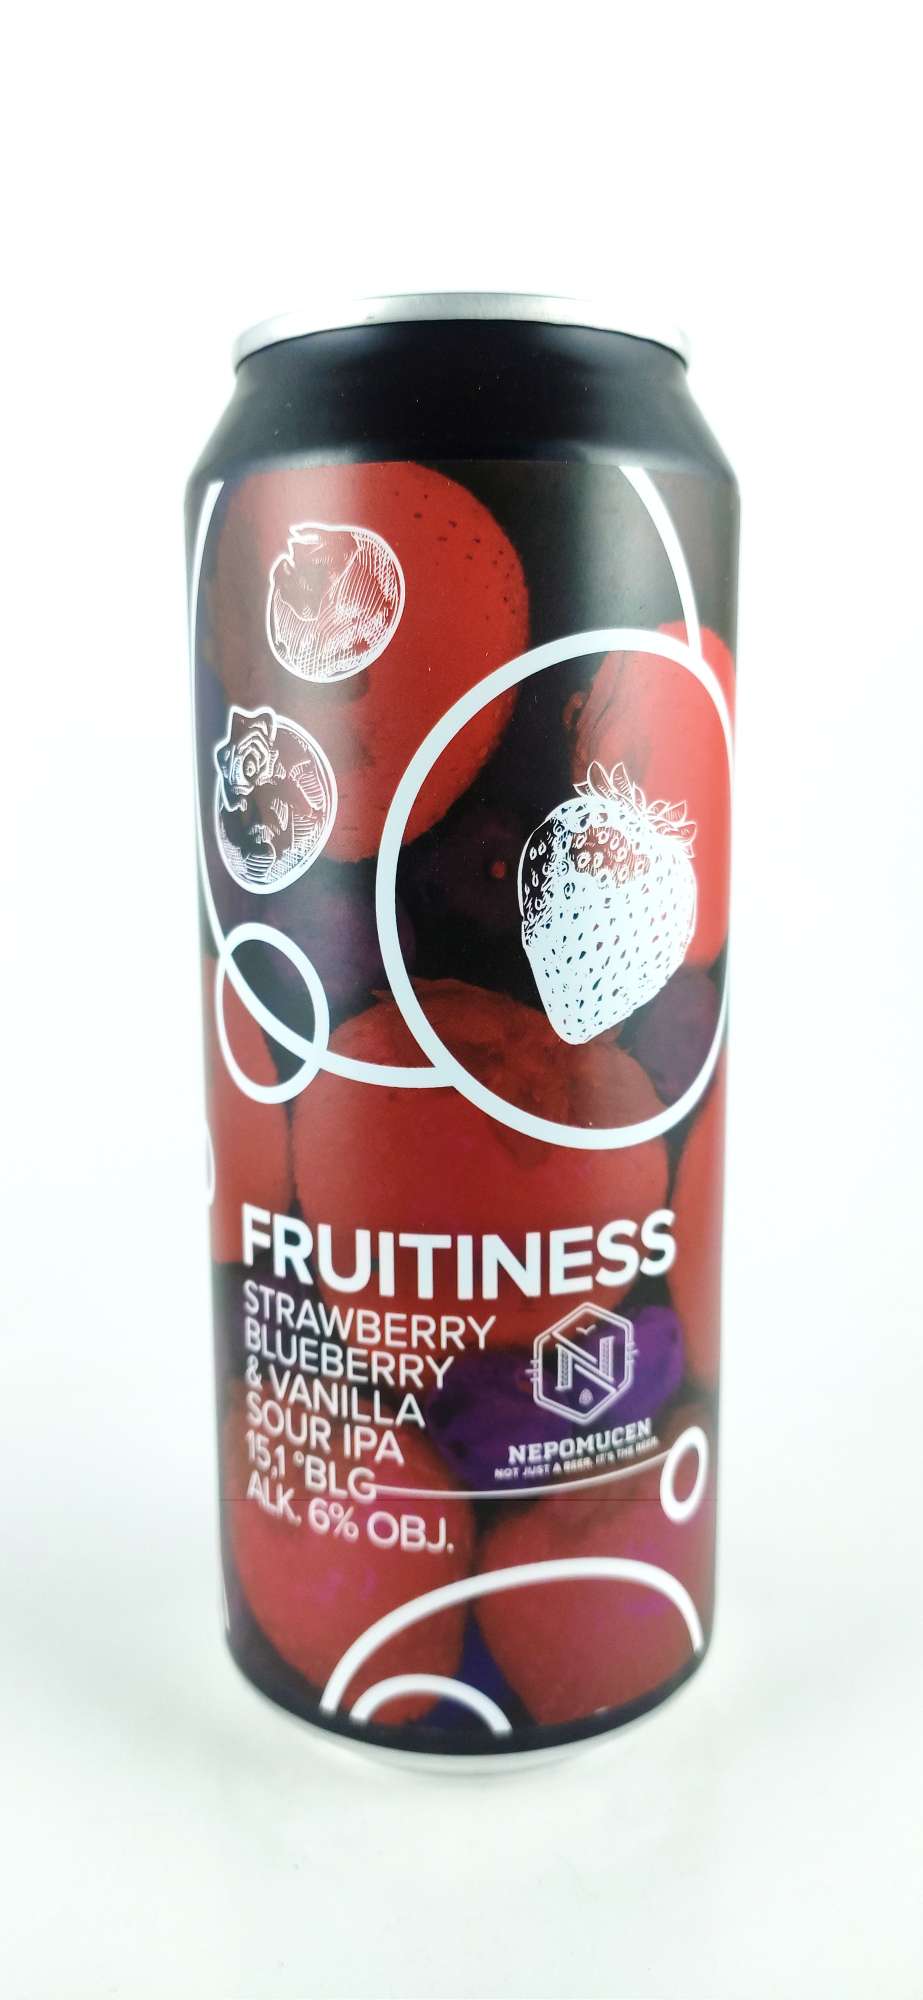 Nepomucen Fruitiness Strawberry, Blueberry, Vanilia Sour Ipa 15°